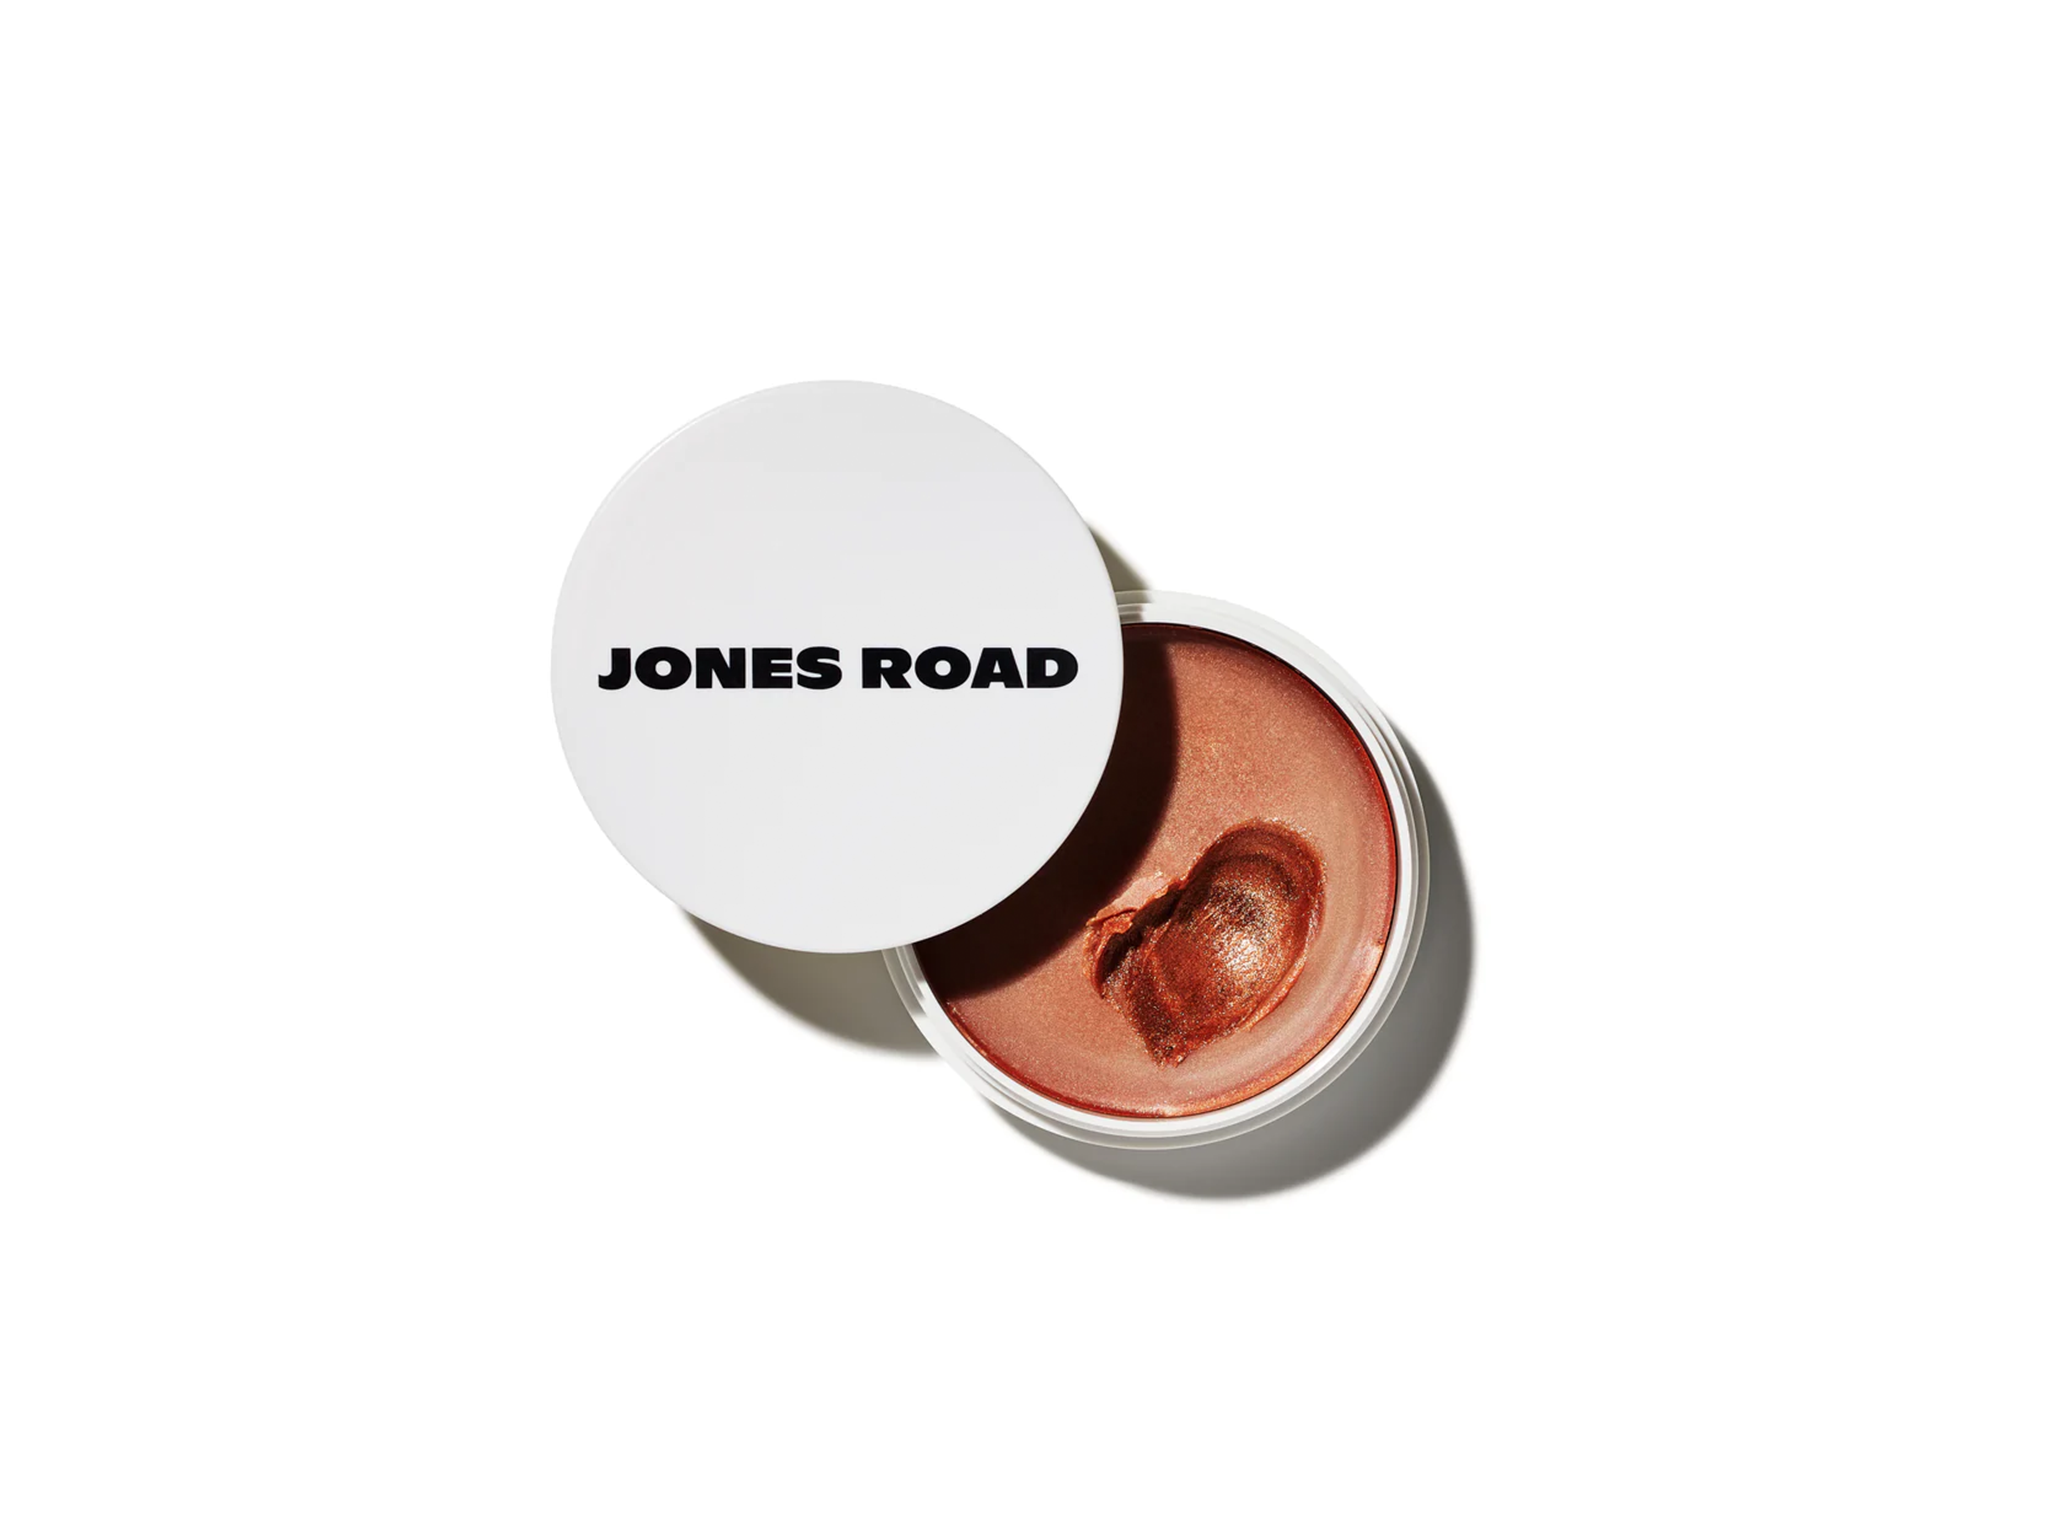 Jones Road review miracle balm